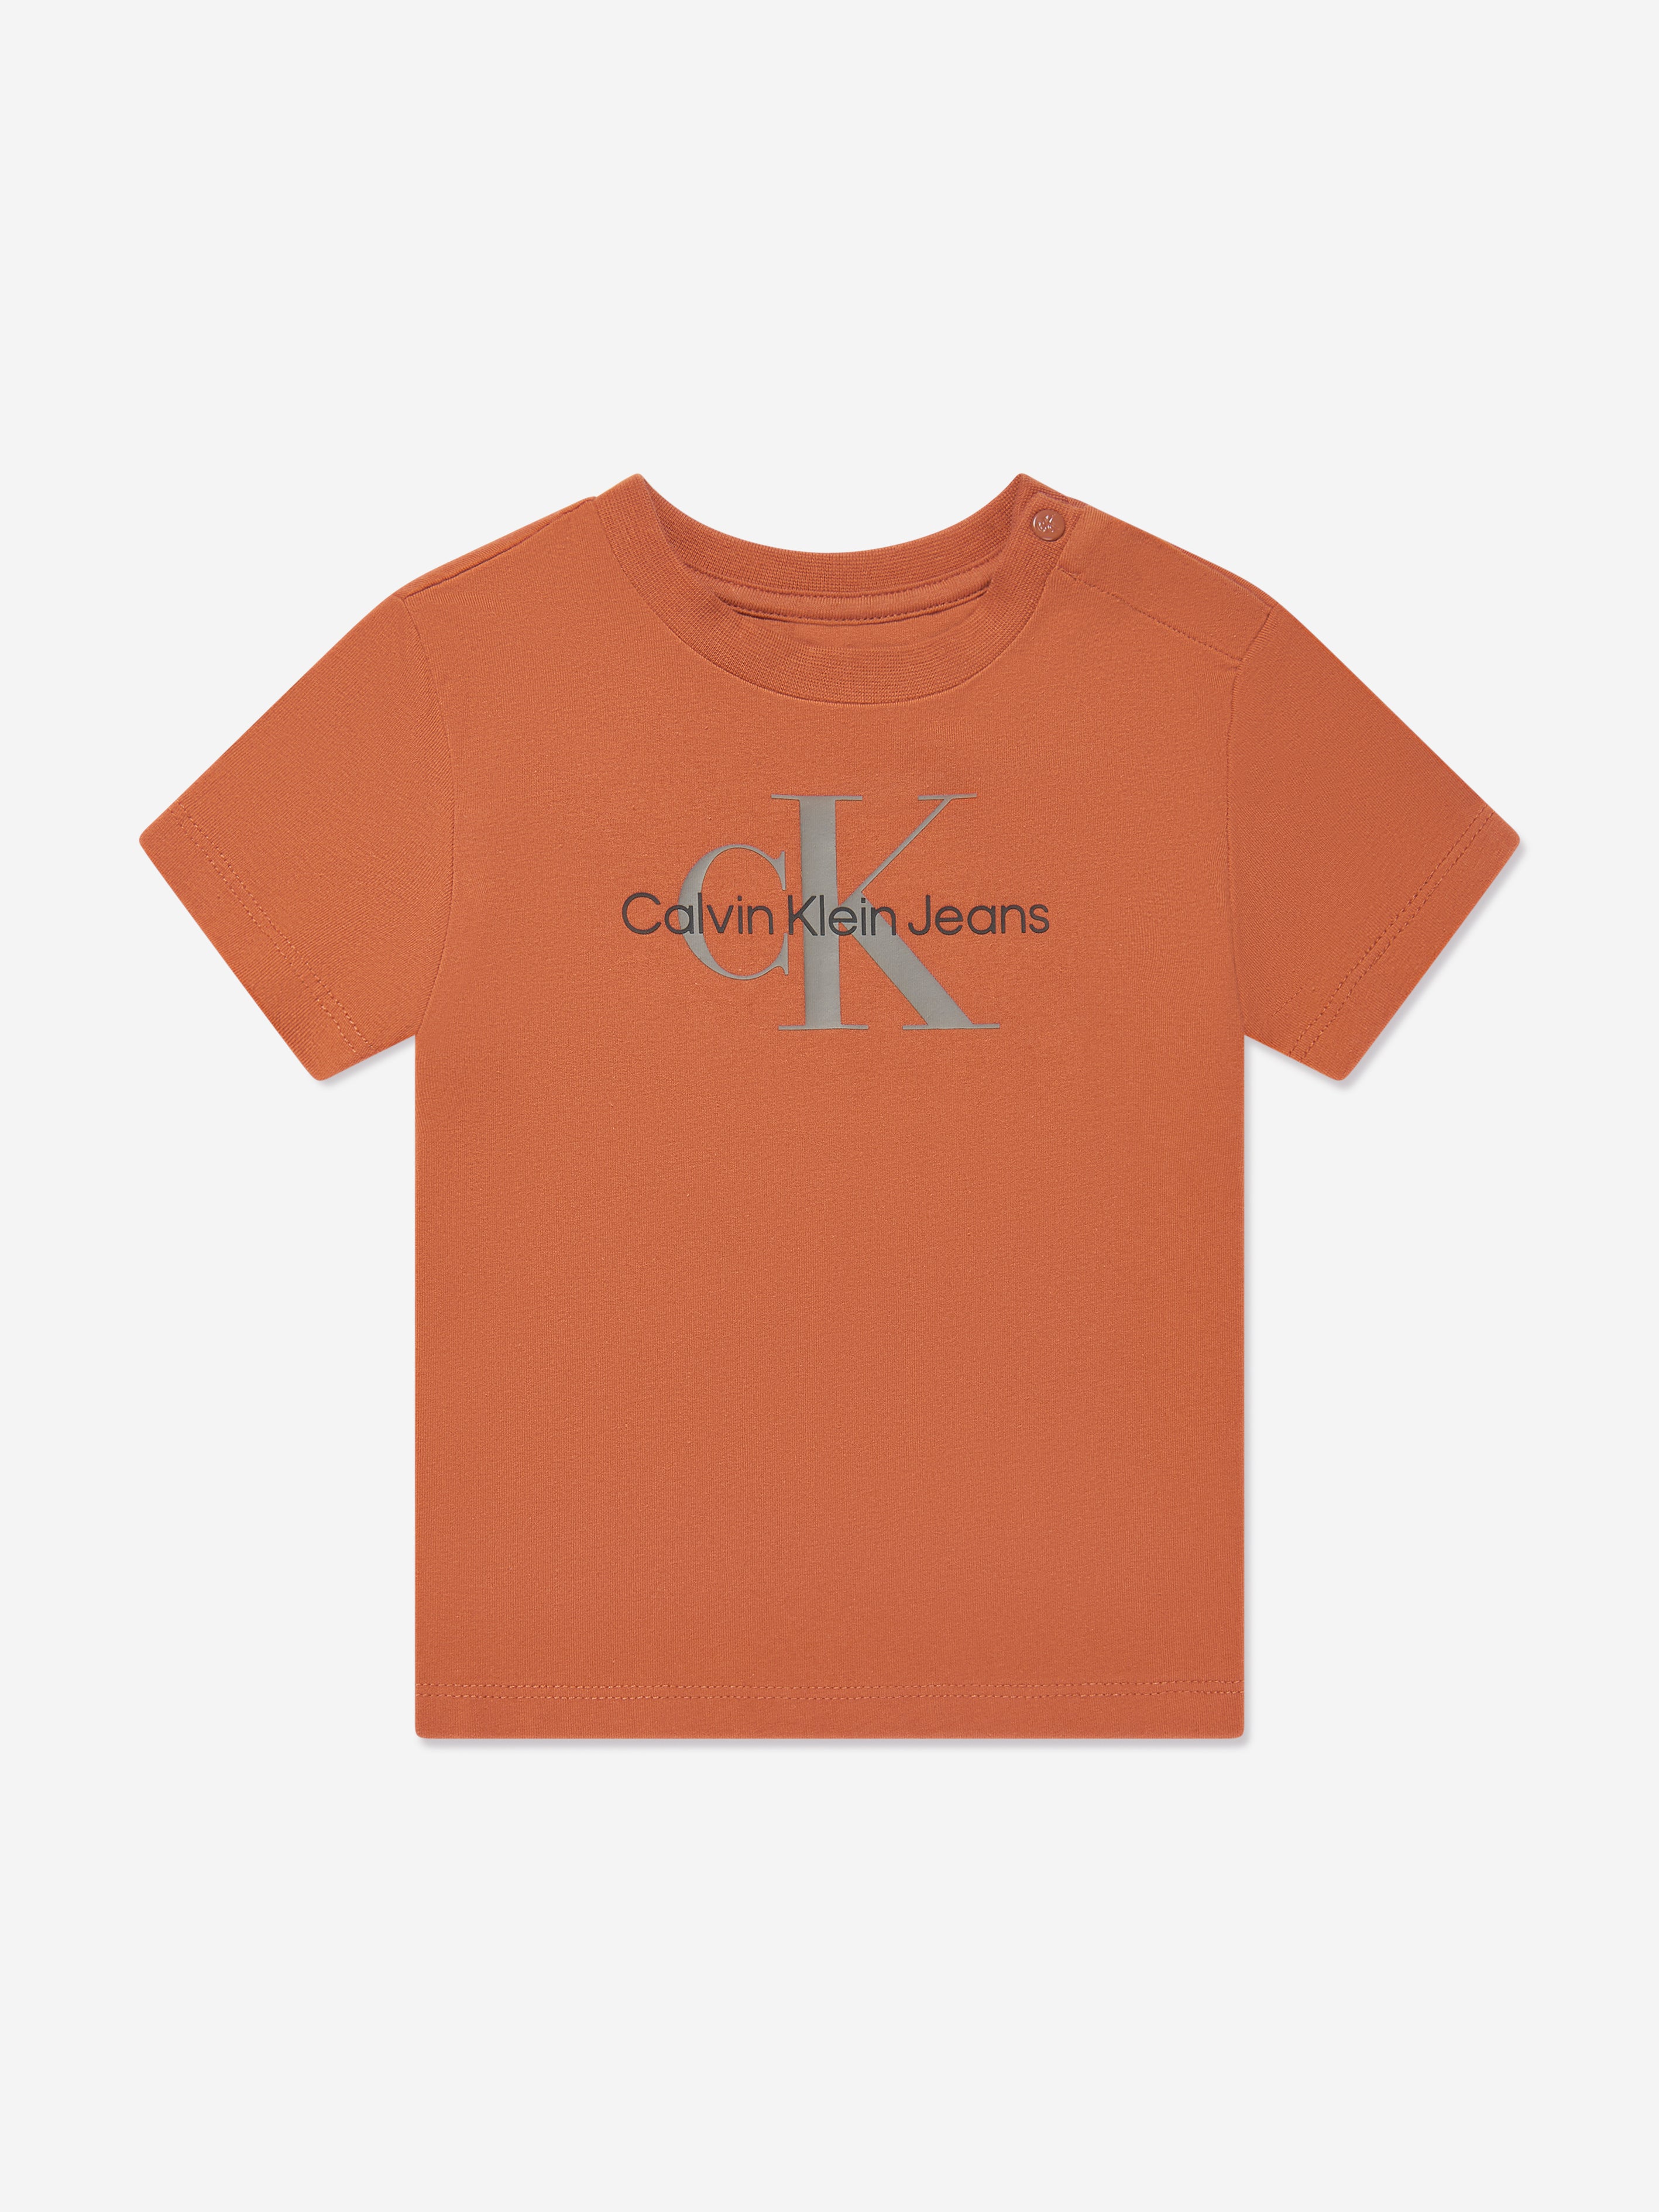 Calvin Klein Jeans in T-Shirt Clothing Monogram Auburn Childsplay | Baby